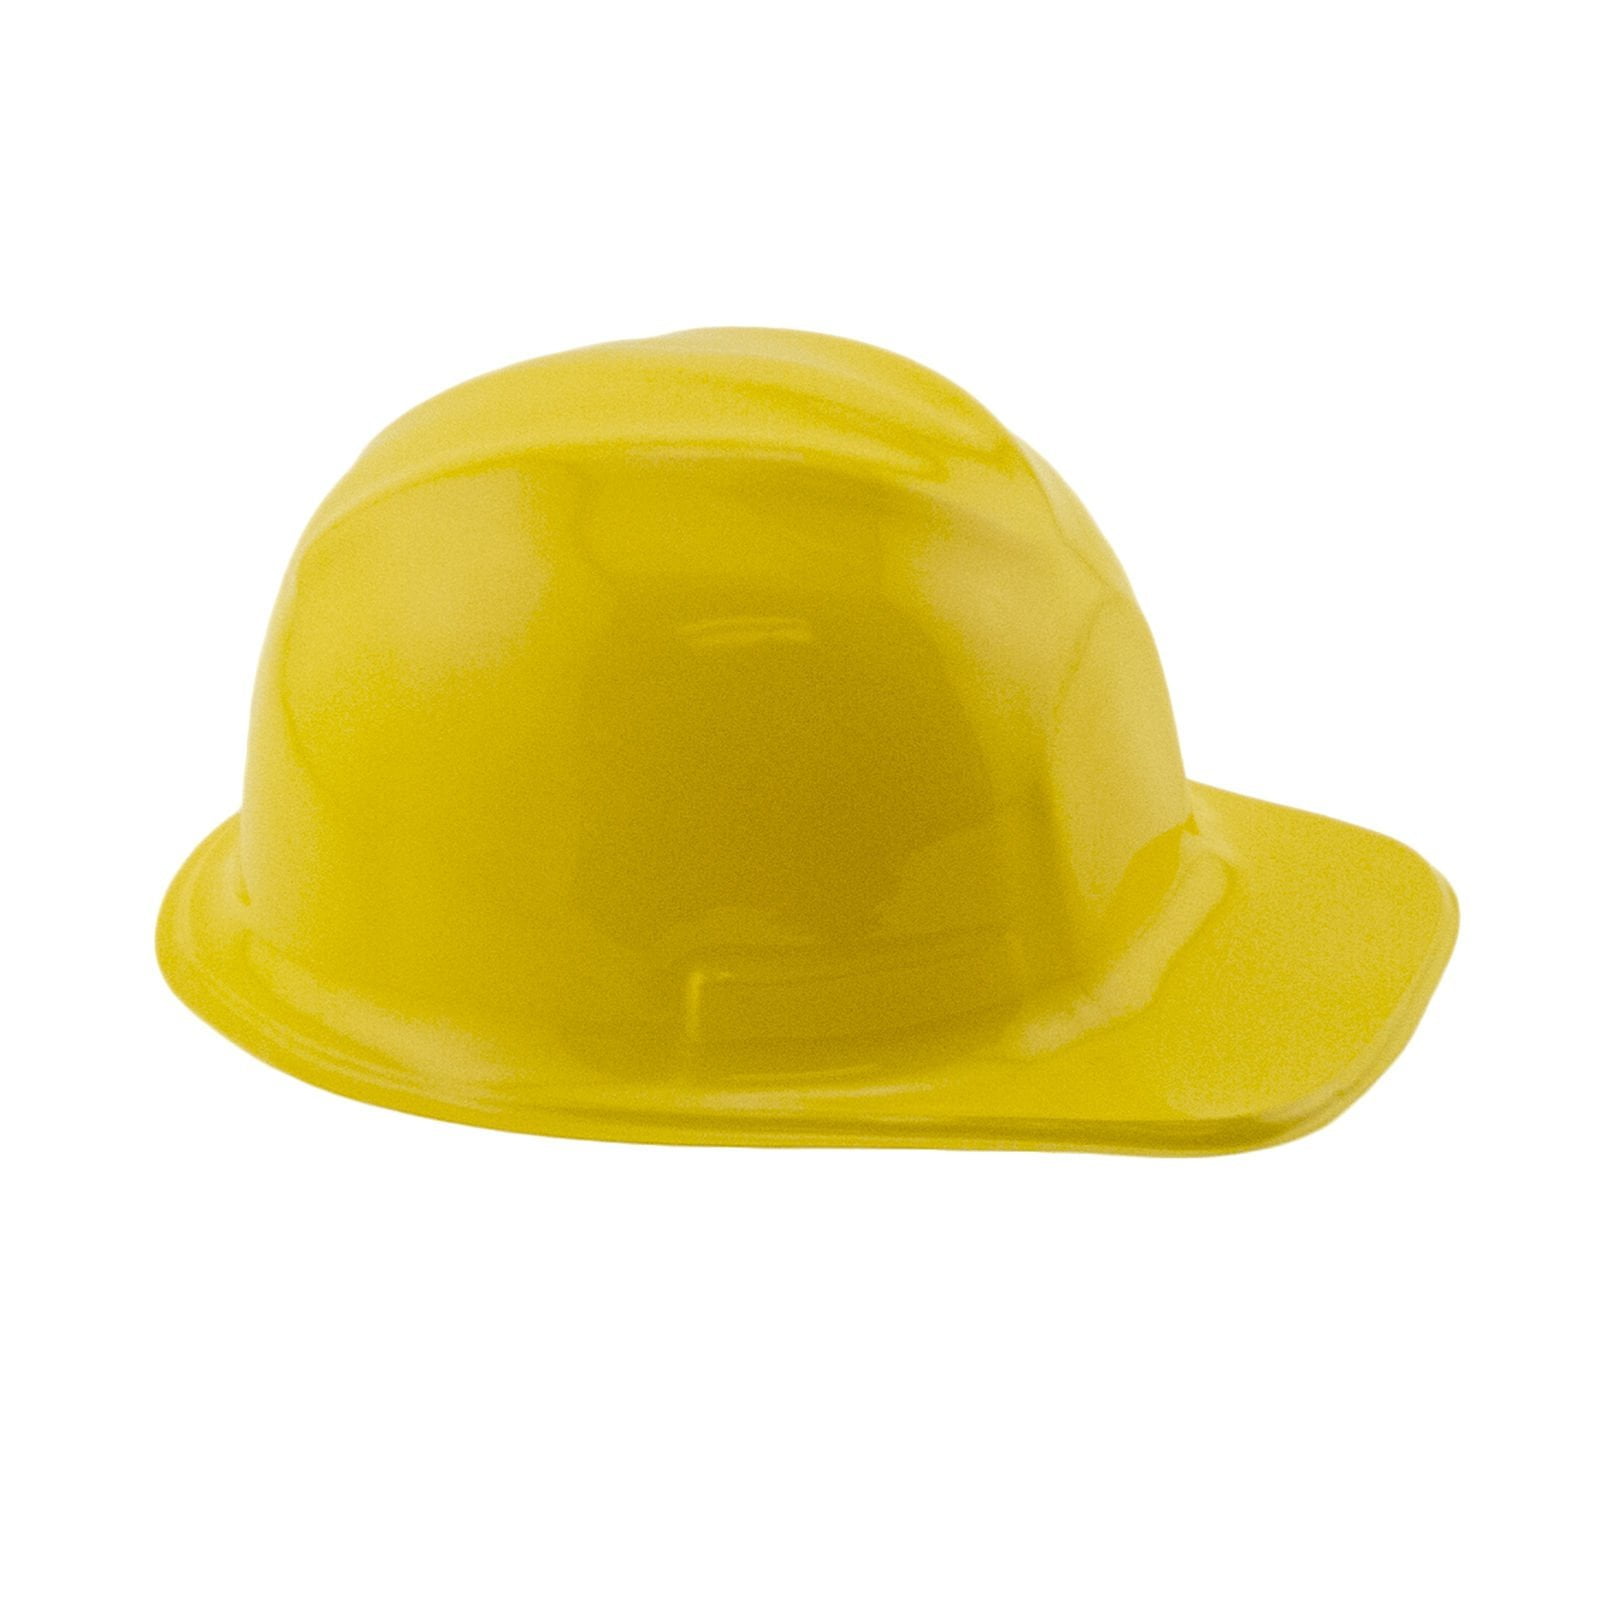 Adorox 12pcs Yellow Construction Soft Plastic Child Hat Helmet Costume Birthday Party Favor Kids Hard Cap Halloween Toy 12 Yellow Hats Walmart Com Walmart Com - roblox yellow hard hat